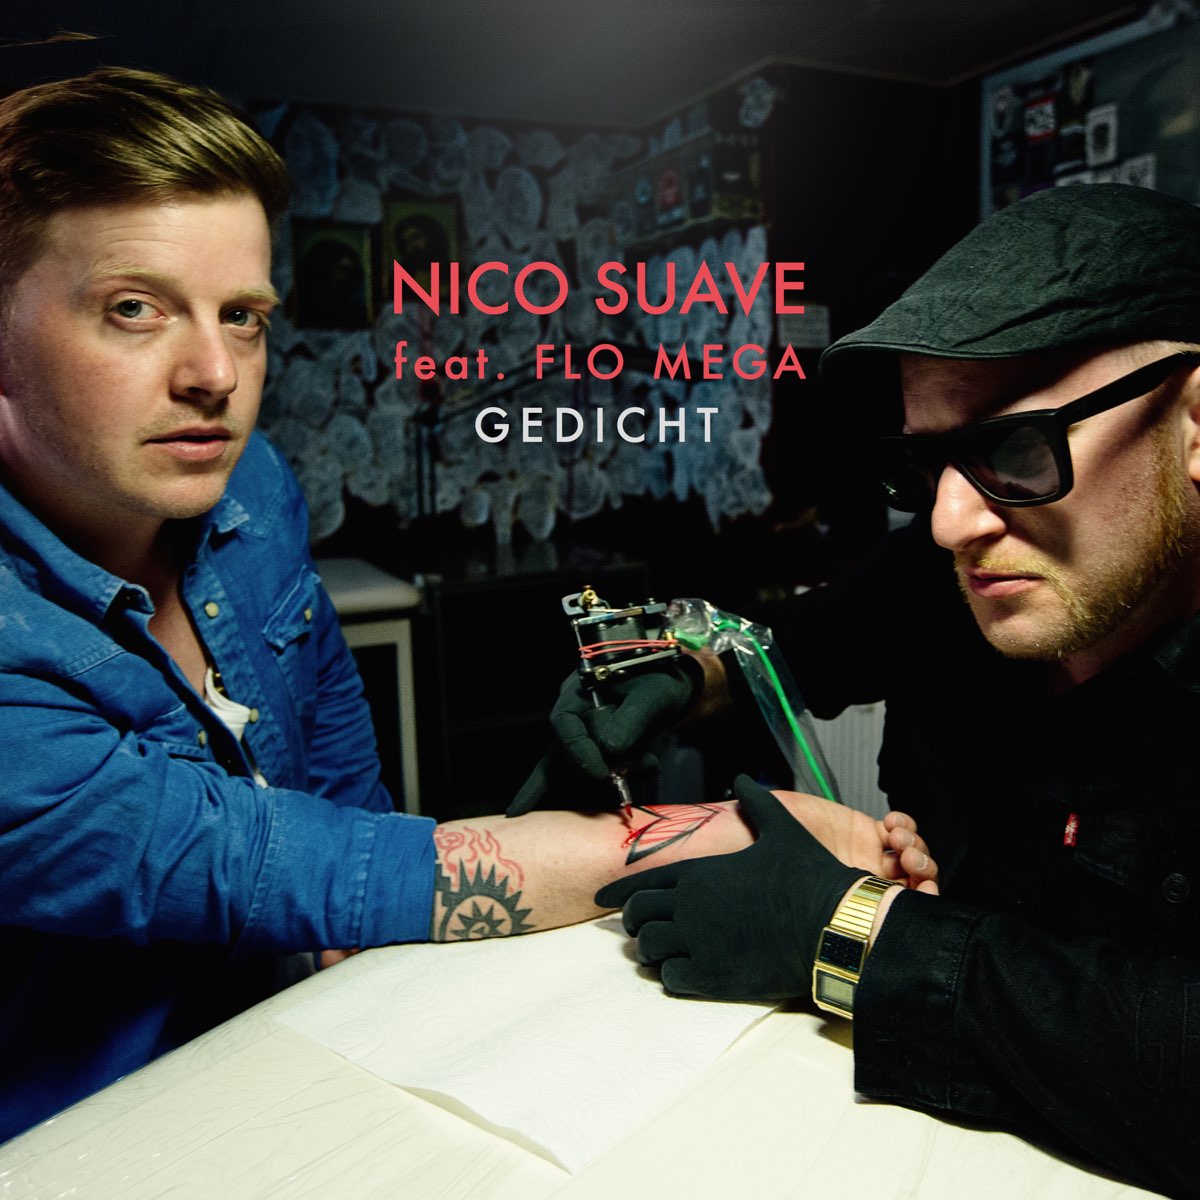 Gedicht (feat. Flo Mega) - Single“ von Nico Suave bei Apple Music